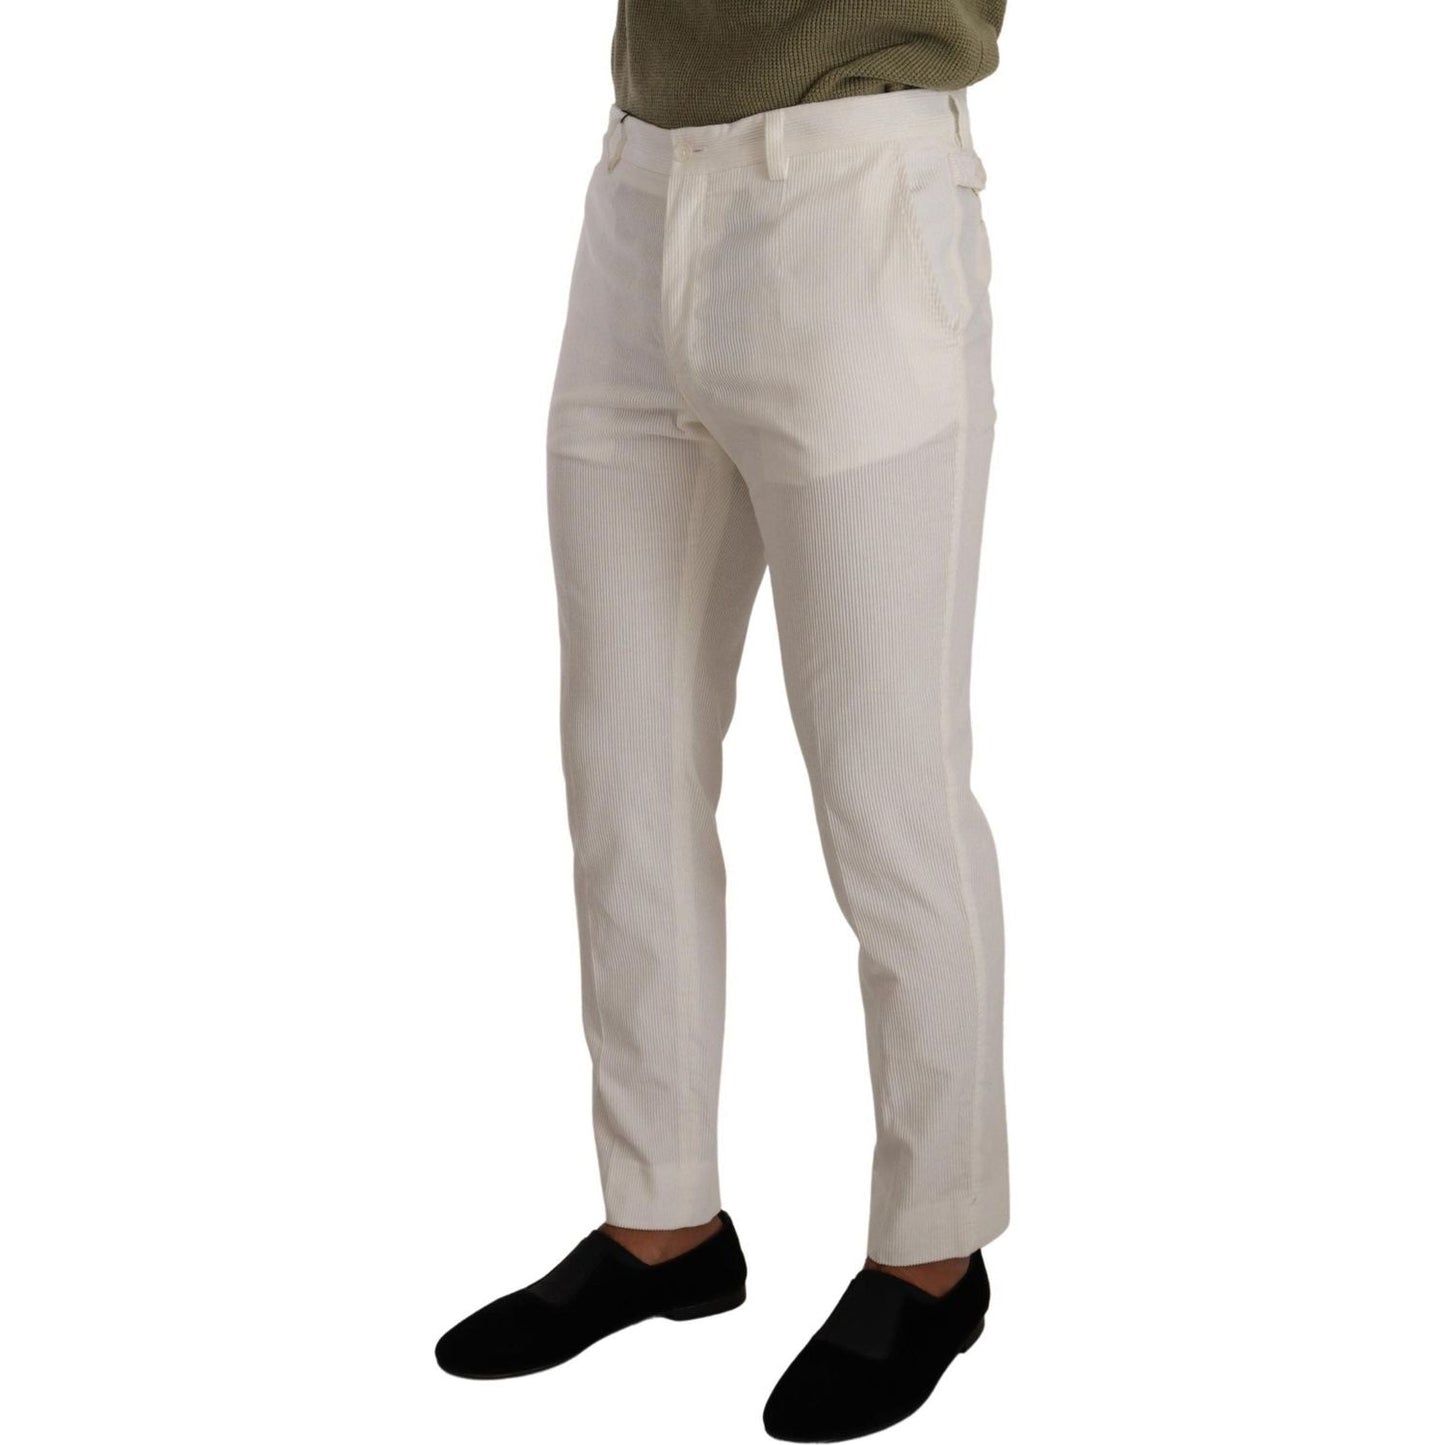 Dolce & Gabbana Elegant Slim Fit Cotton Trousers white-cotton-skinny-corduroy-trouser-pants IMG_6596-scaled-6a567dd5-600.jpg